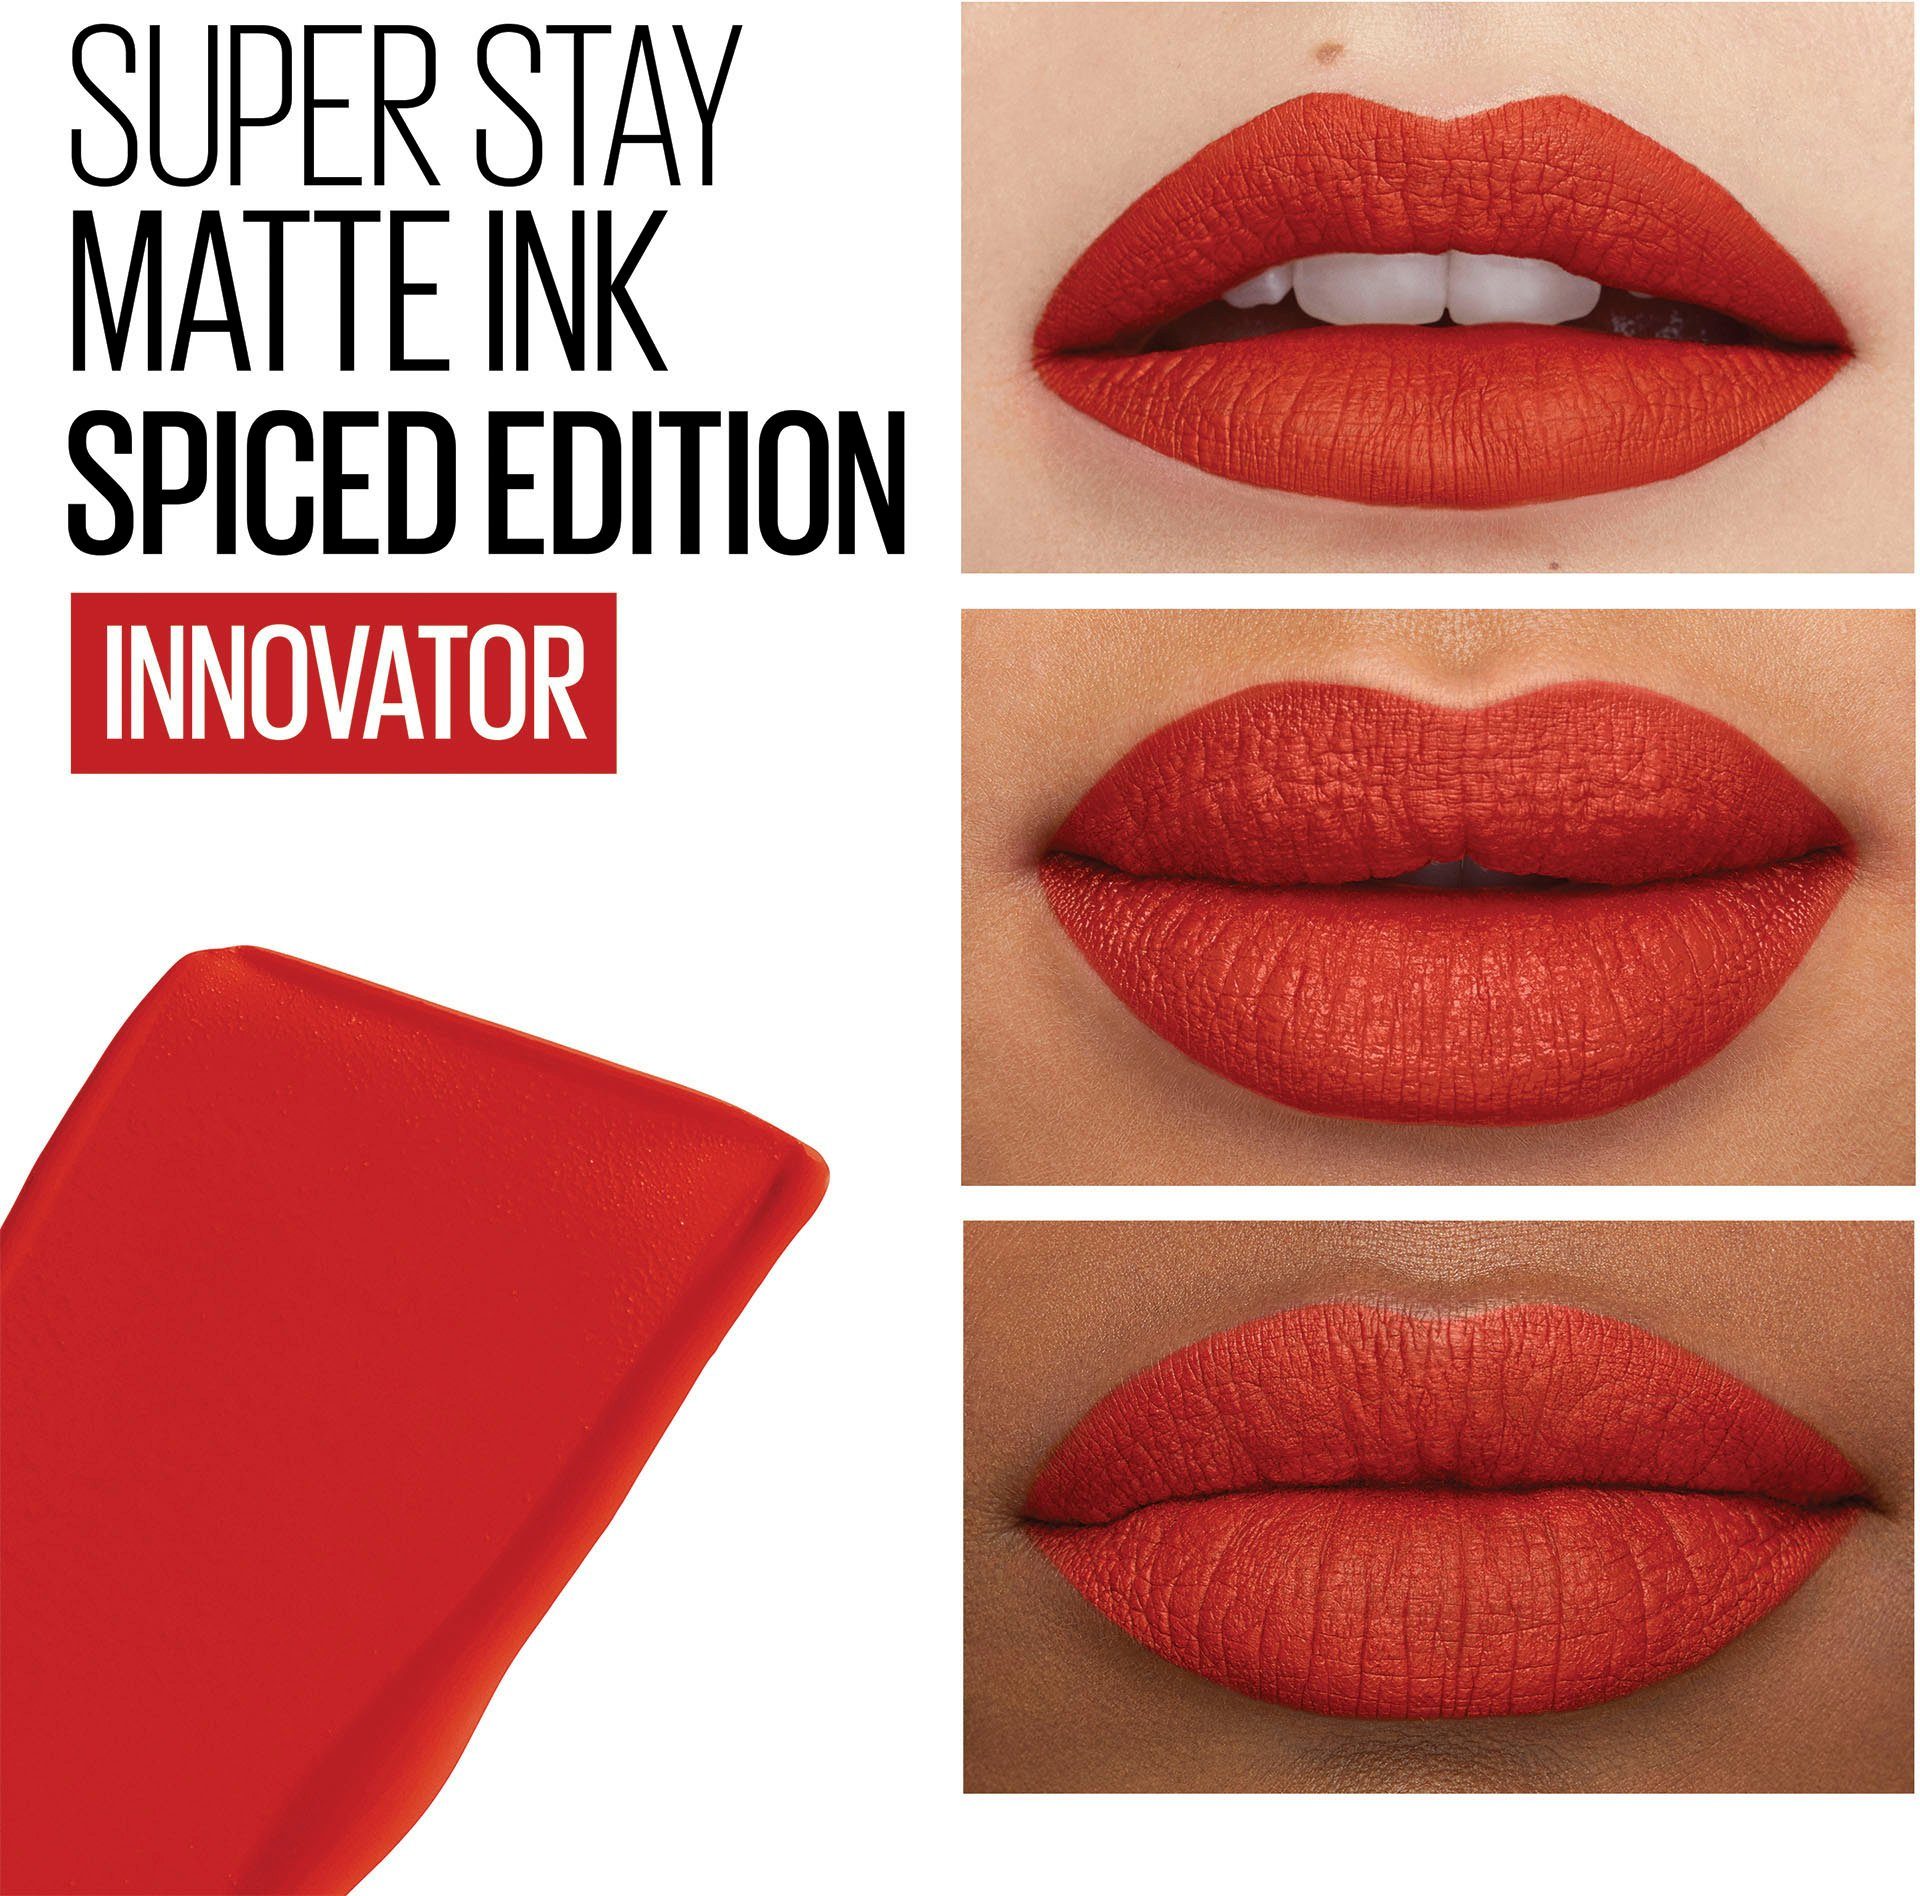 Spiced NEW Up Matte 330 Innovator YORK MAYBELLINE Lippenstift Ink Super Stay